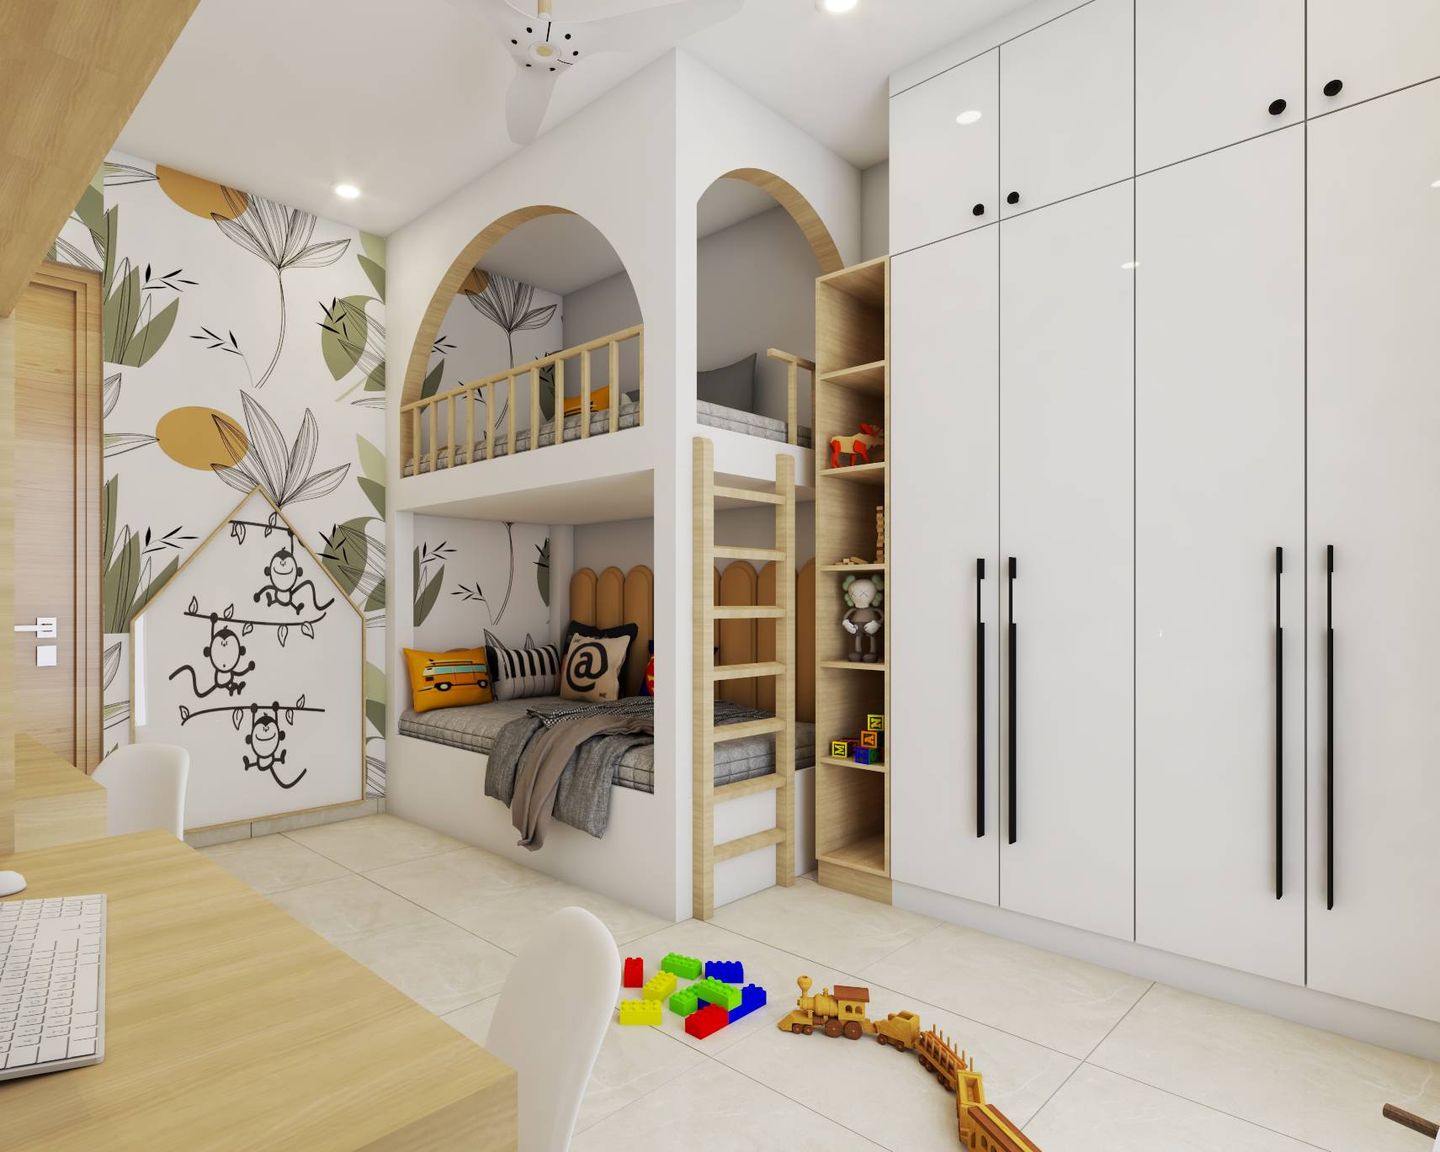 Kid's Bedroom Design With A Bunk Bed - Livspace